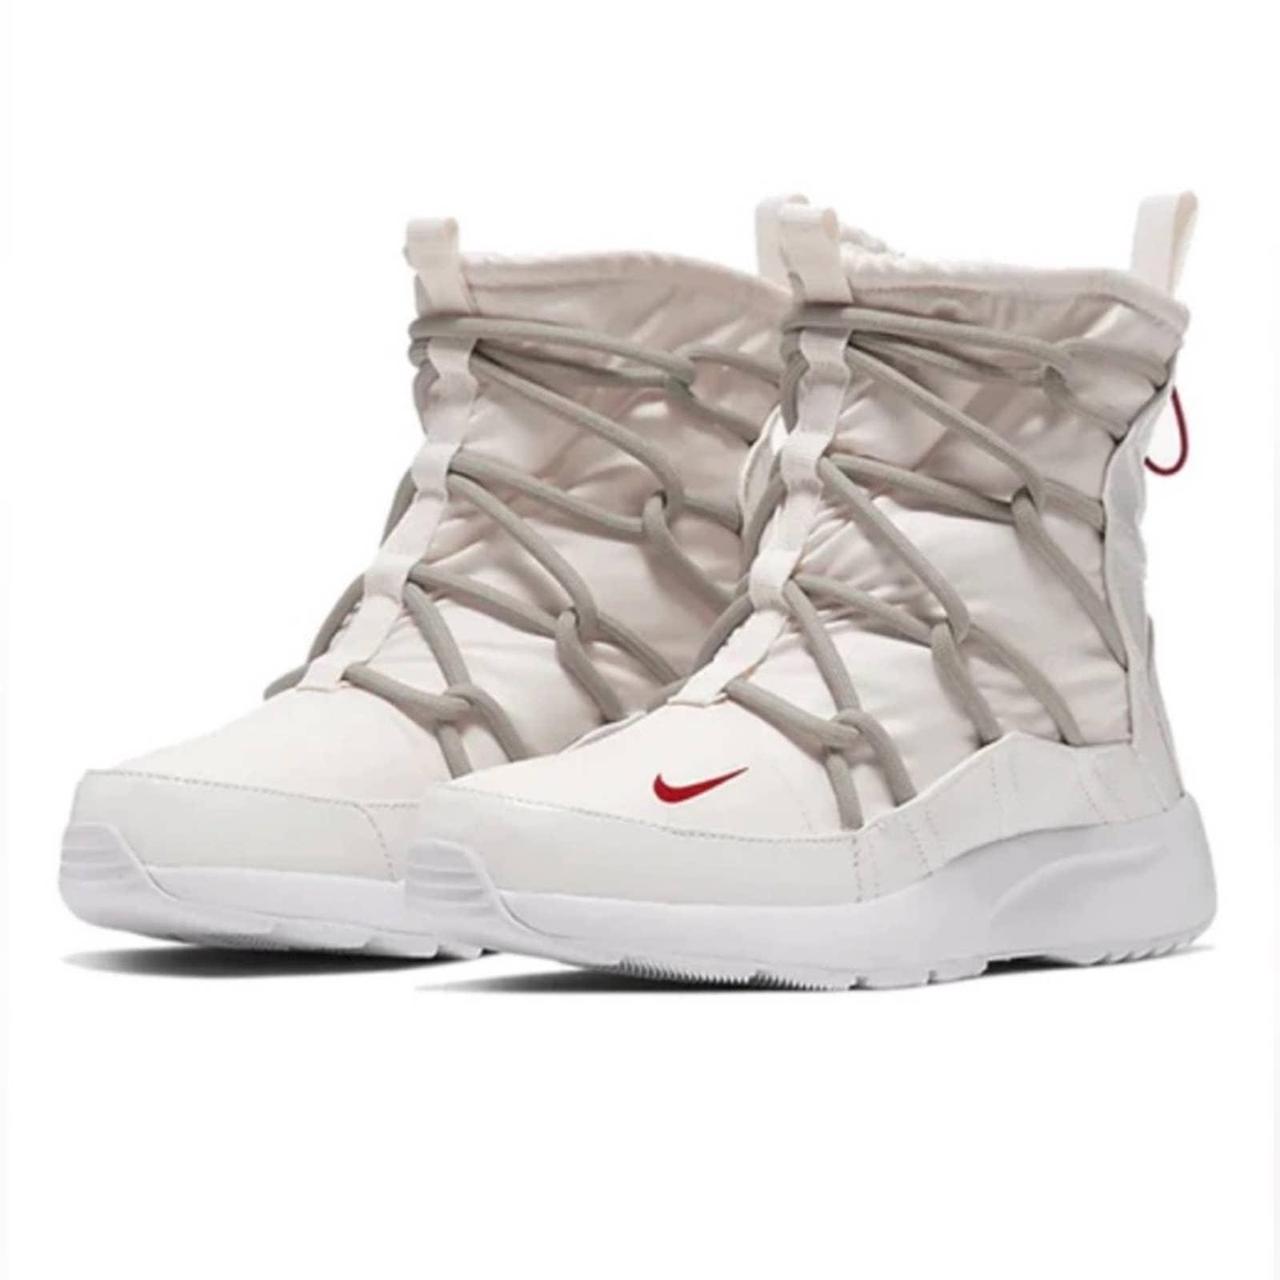 The Air Jordan 1 Brooklyn Marries Sport And Fashion | Sneaker News